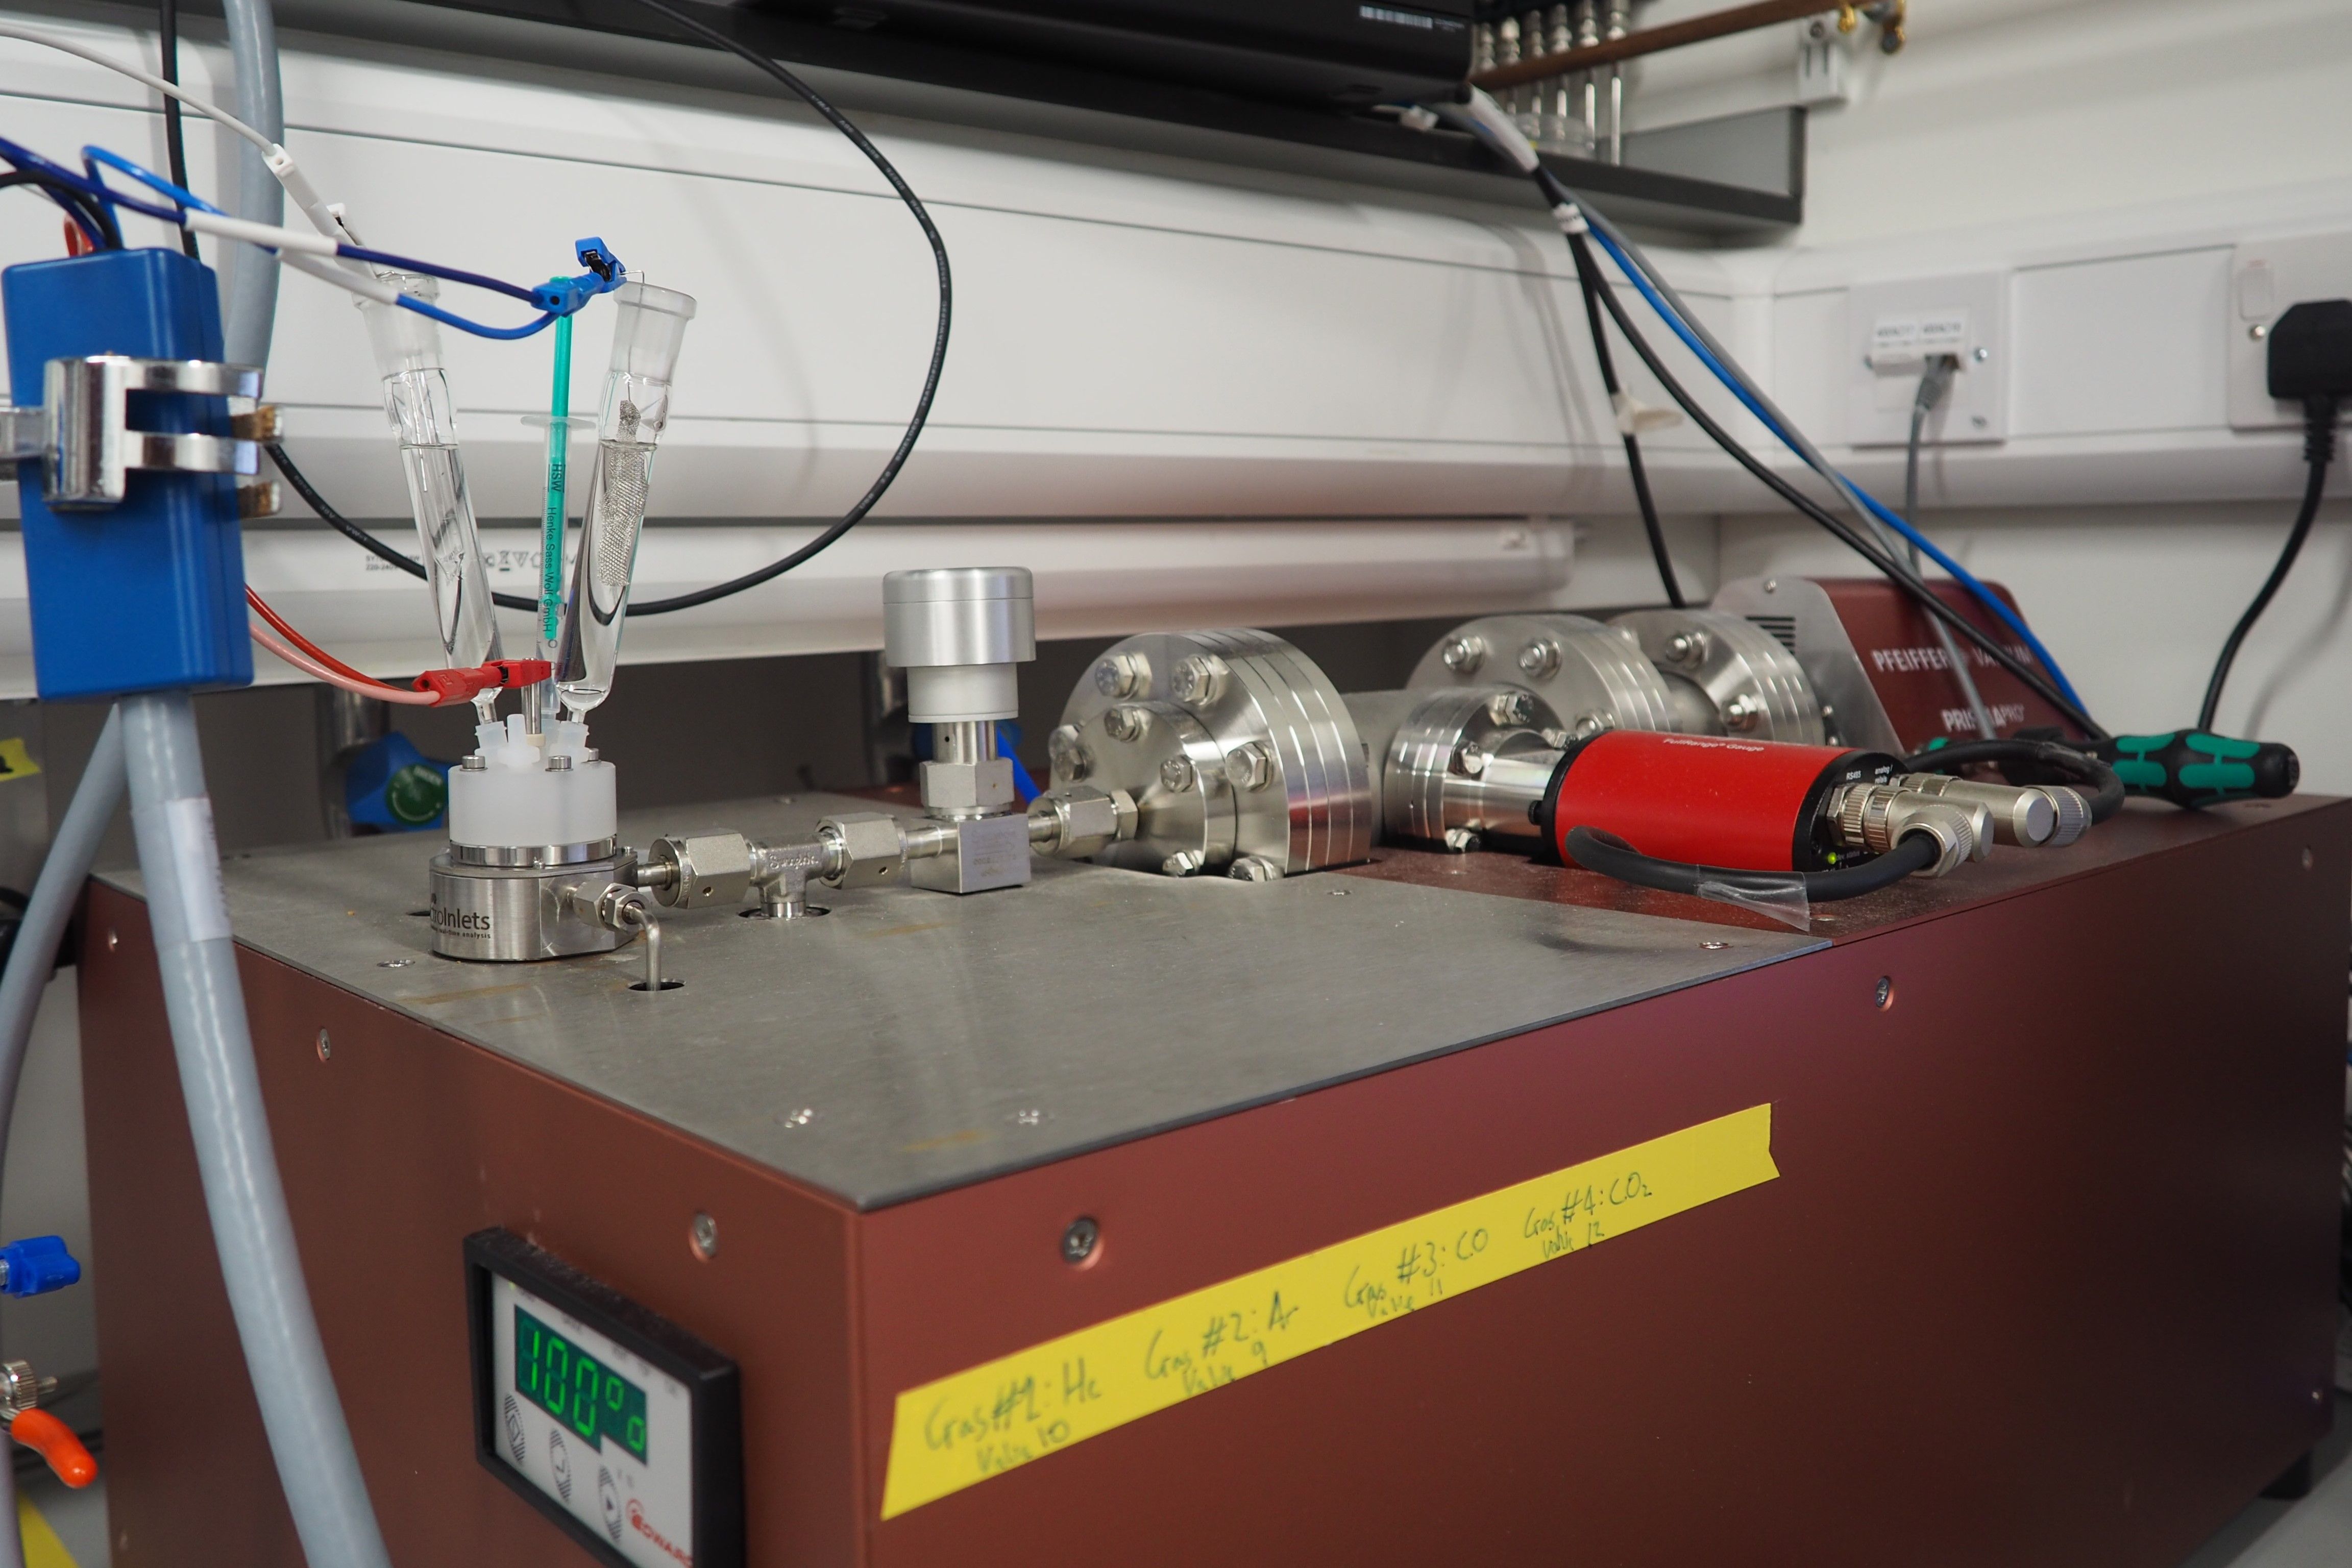 Electrochemistry Mass spectrometry (aqueous) setup